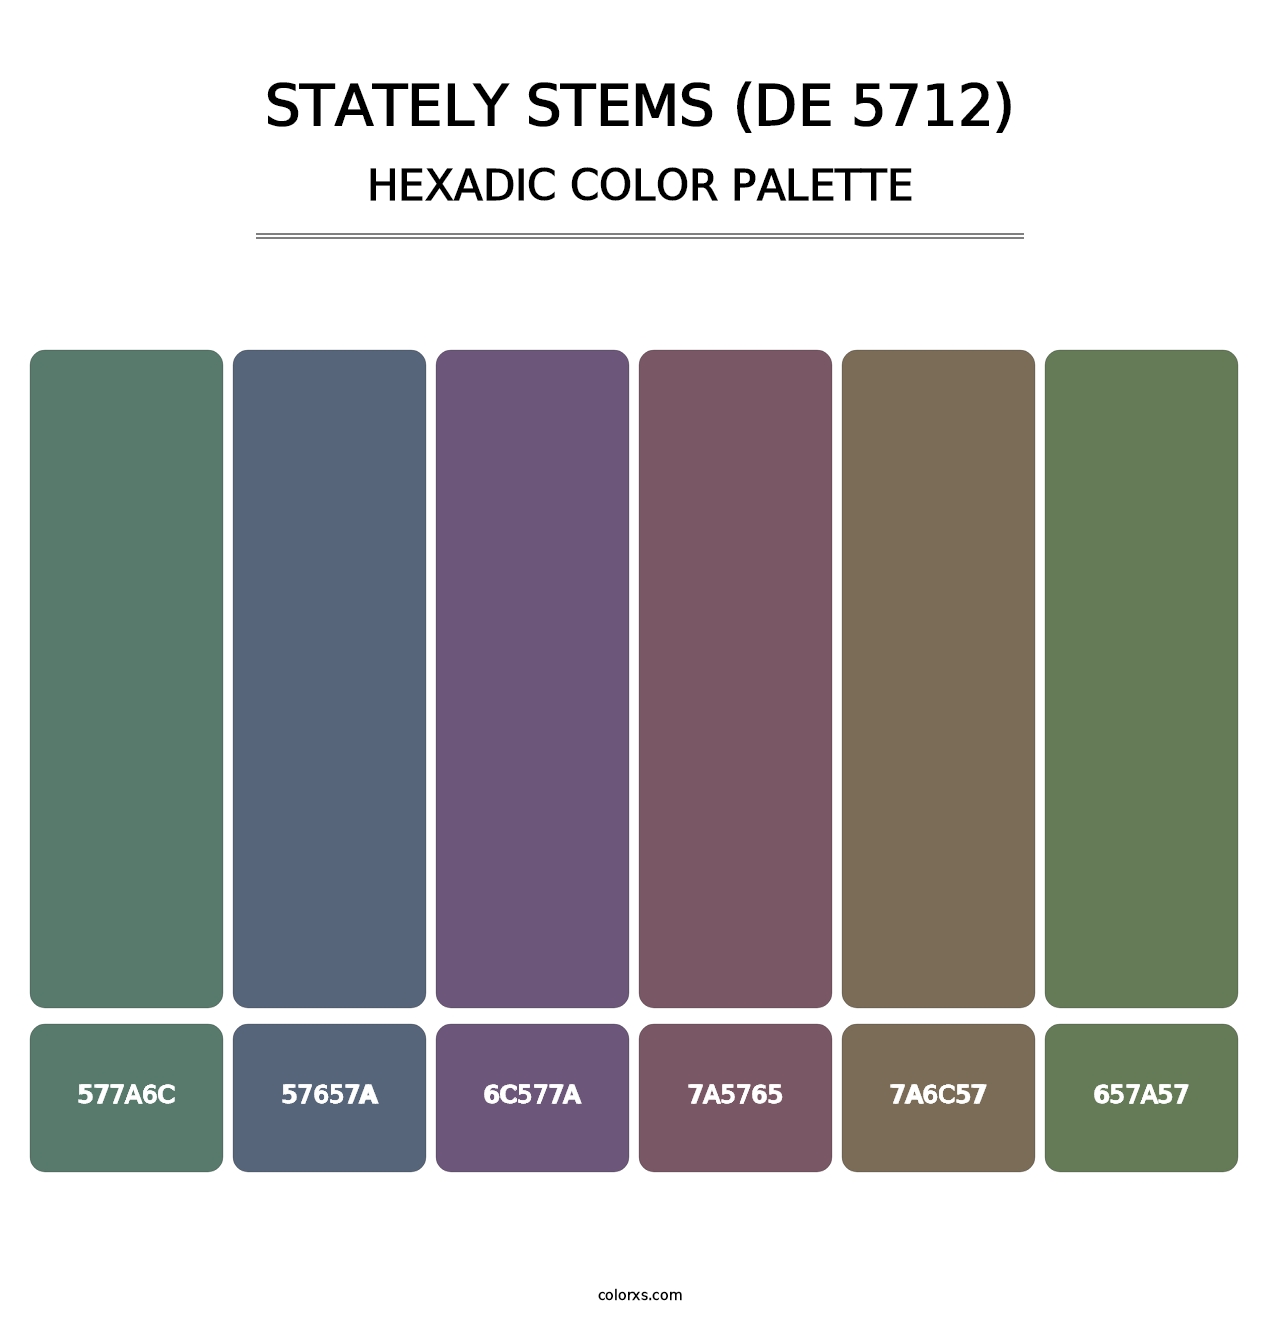 Stately Stems (DE 5712) - Hexadic Color Palette